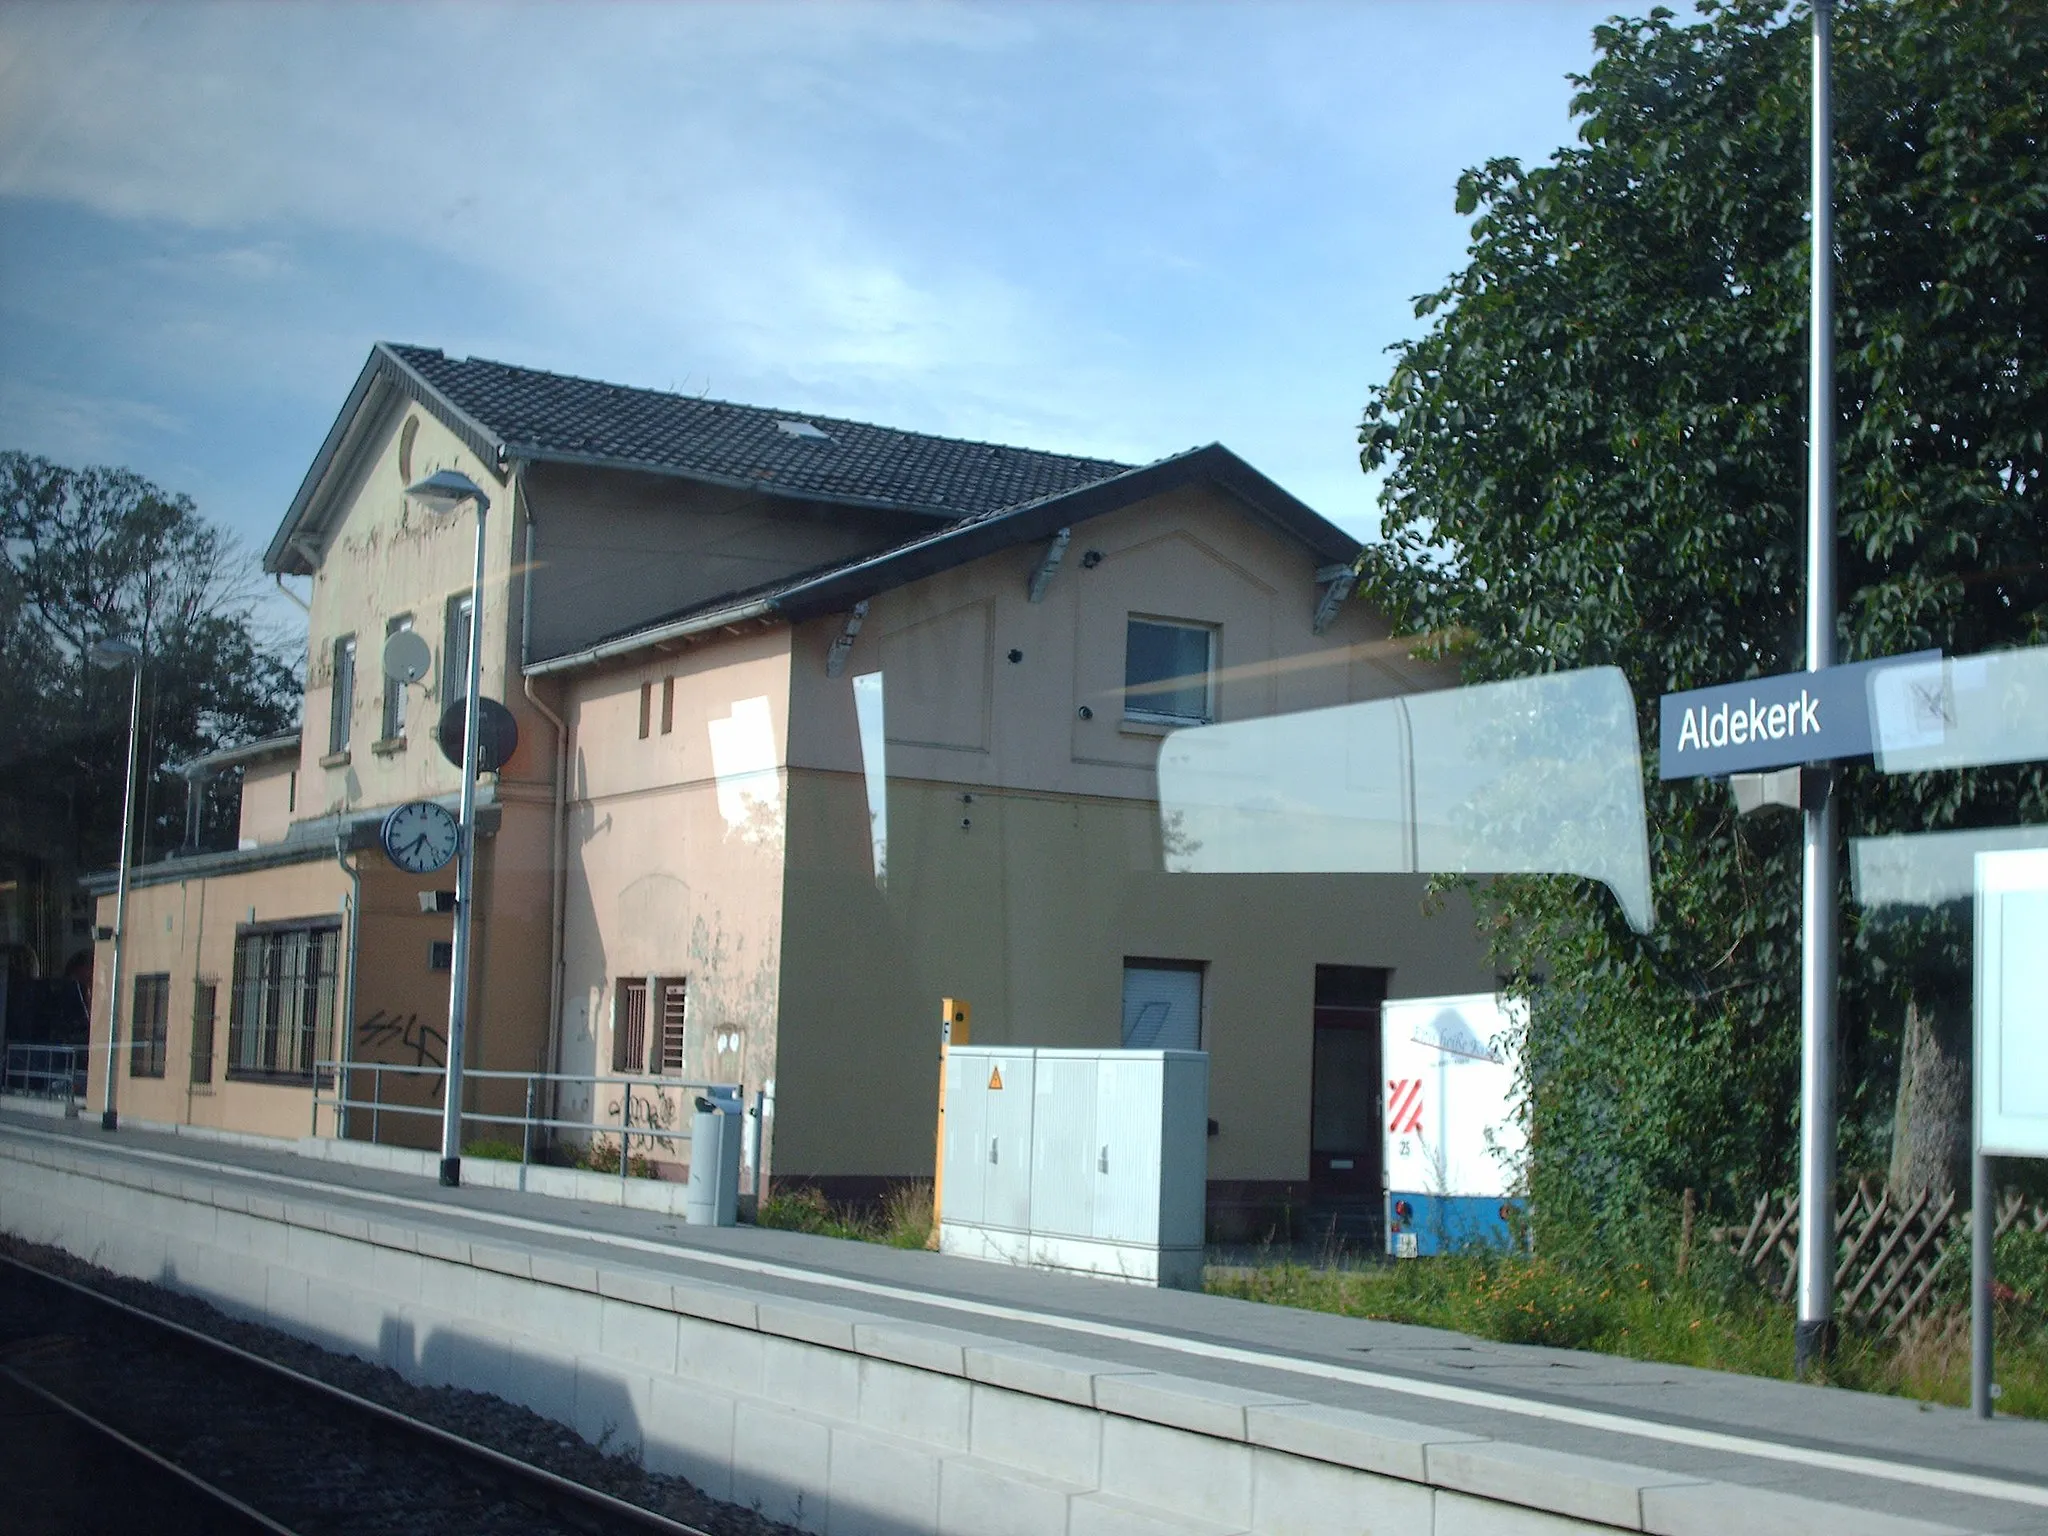 Photo showing: Aldekerk station, Kerken, Germany